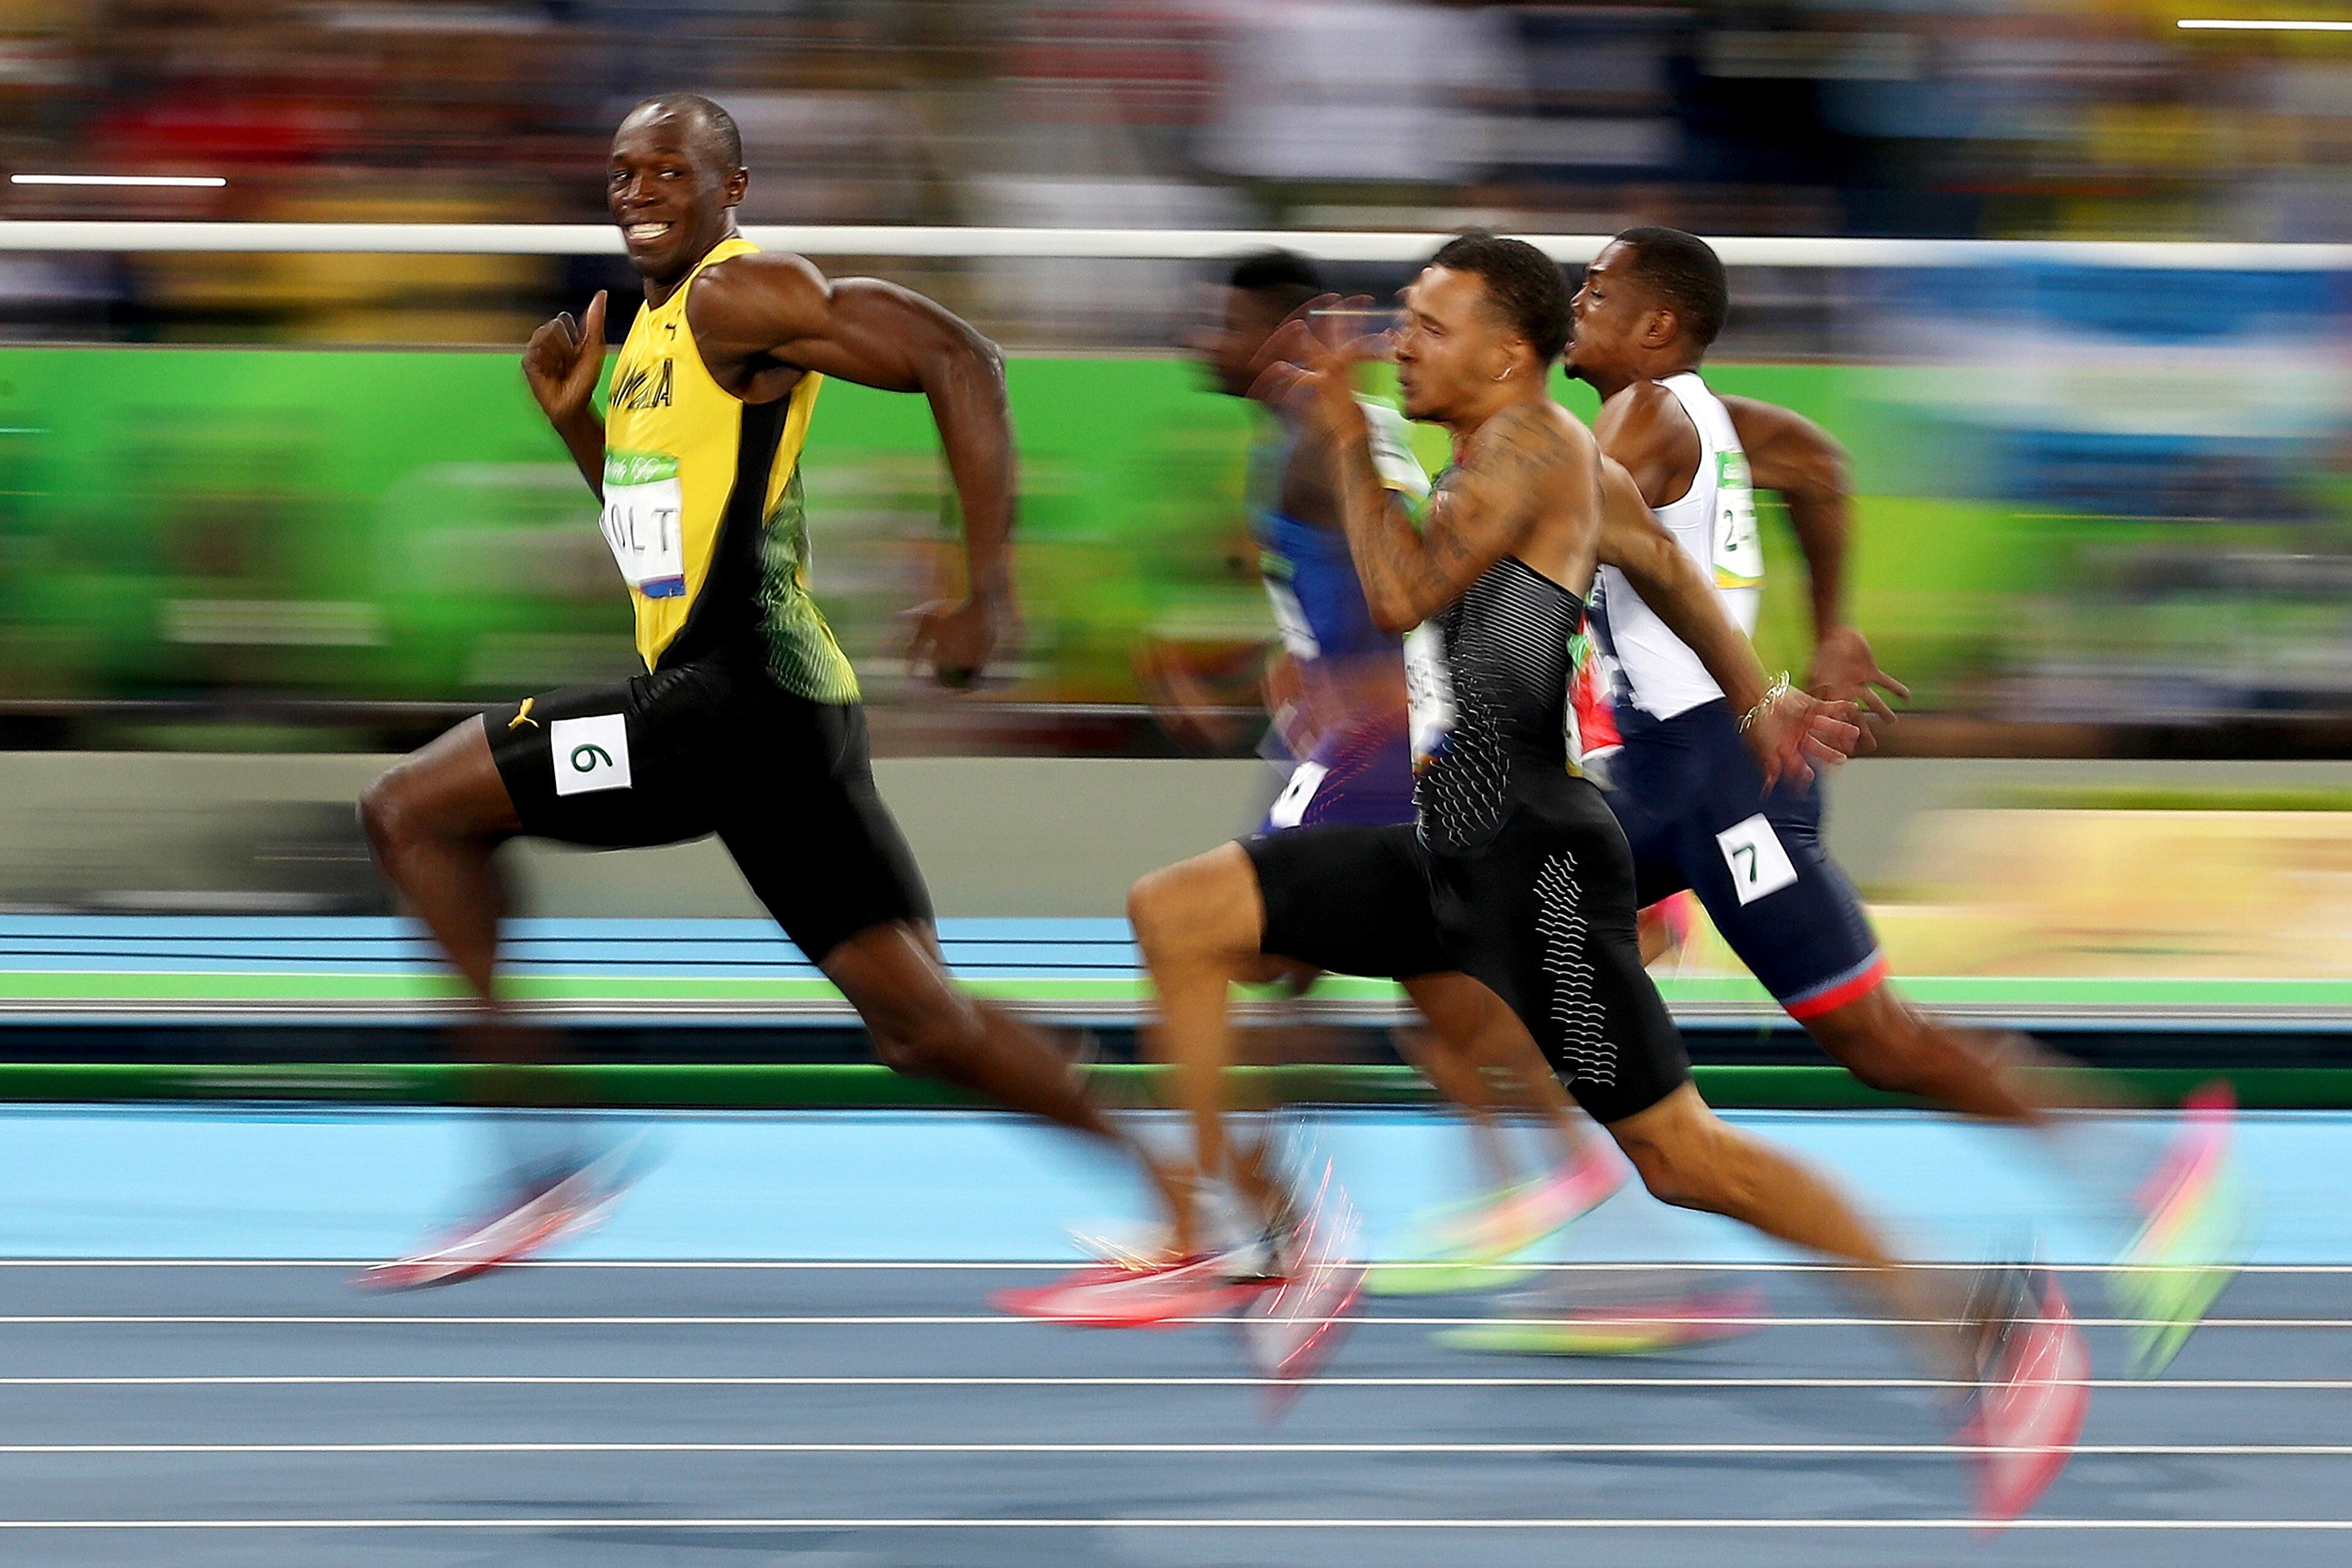 Спортсмен за 10 с пробежал. Усейн болт 200 метров. Усейн болт 9,69. Усэйн болт (Ямайка). Усейн болт бег.